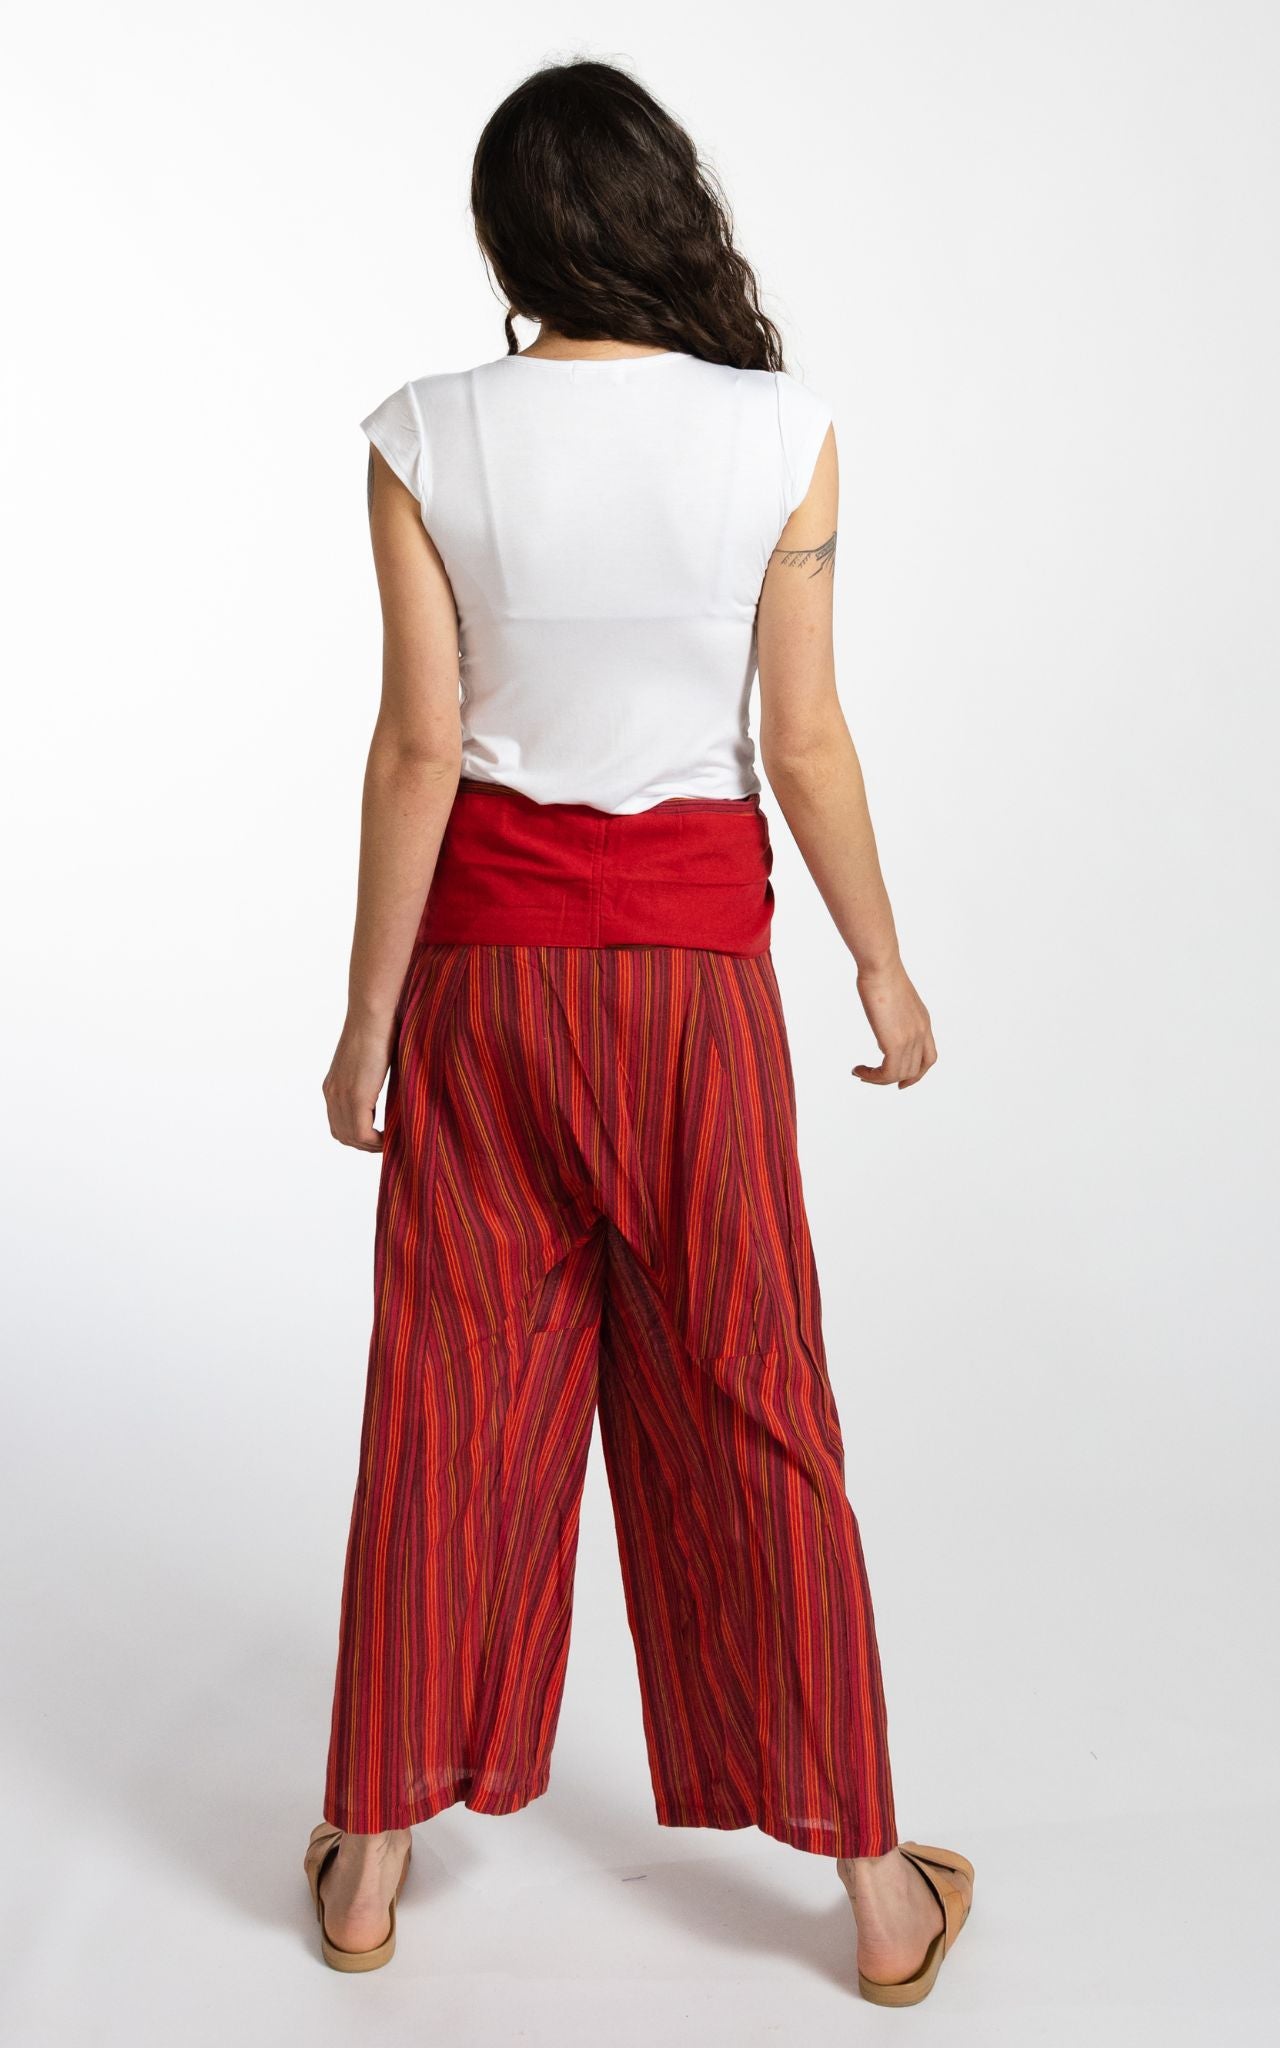 Surya Australia Ethical Cotton Thai Fisherman Pants - Striped Red